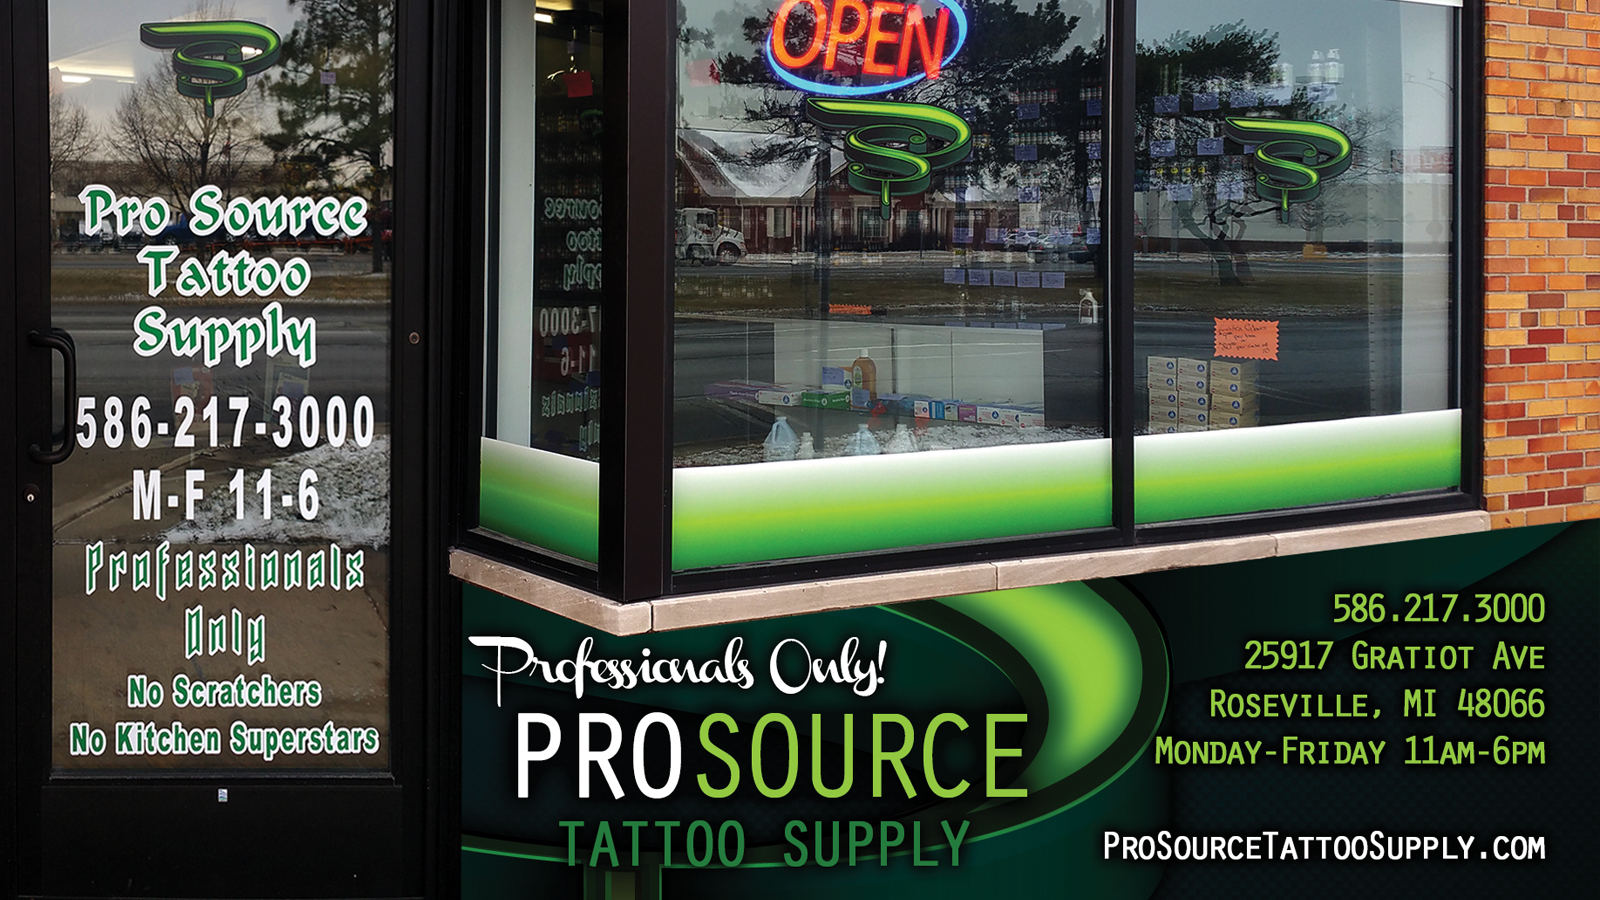 Pro Source Tattoo Supply